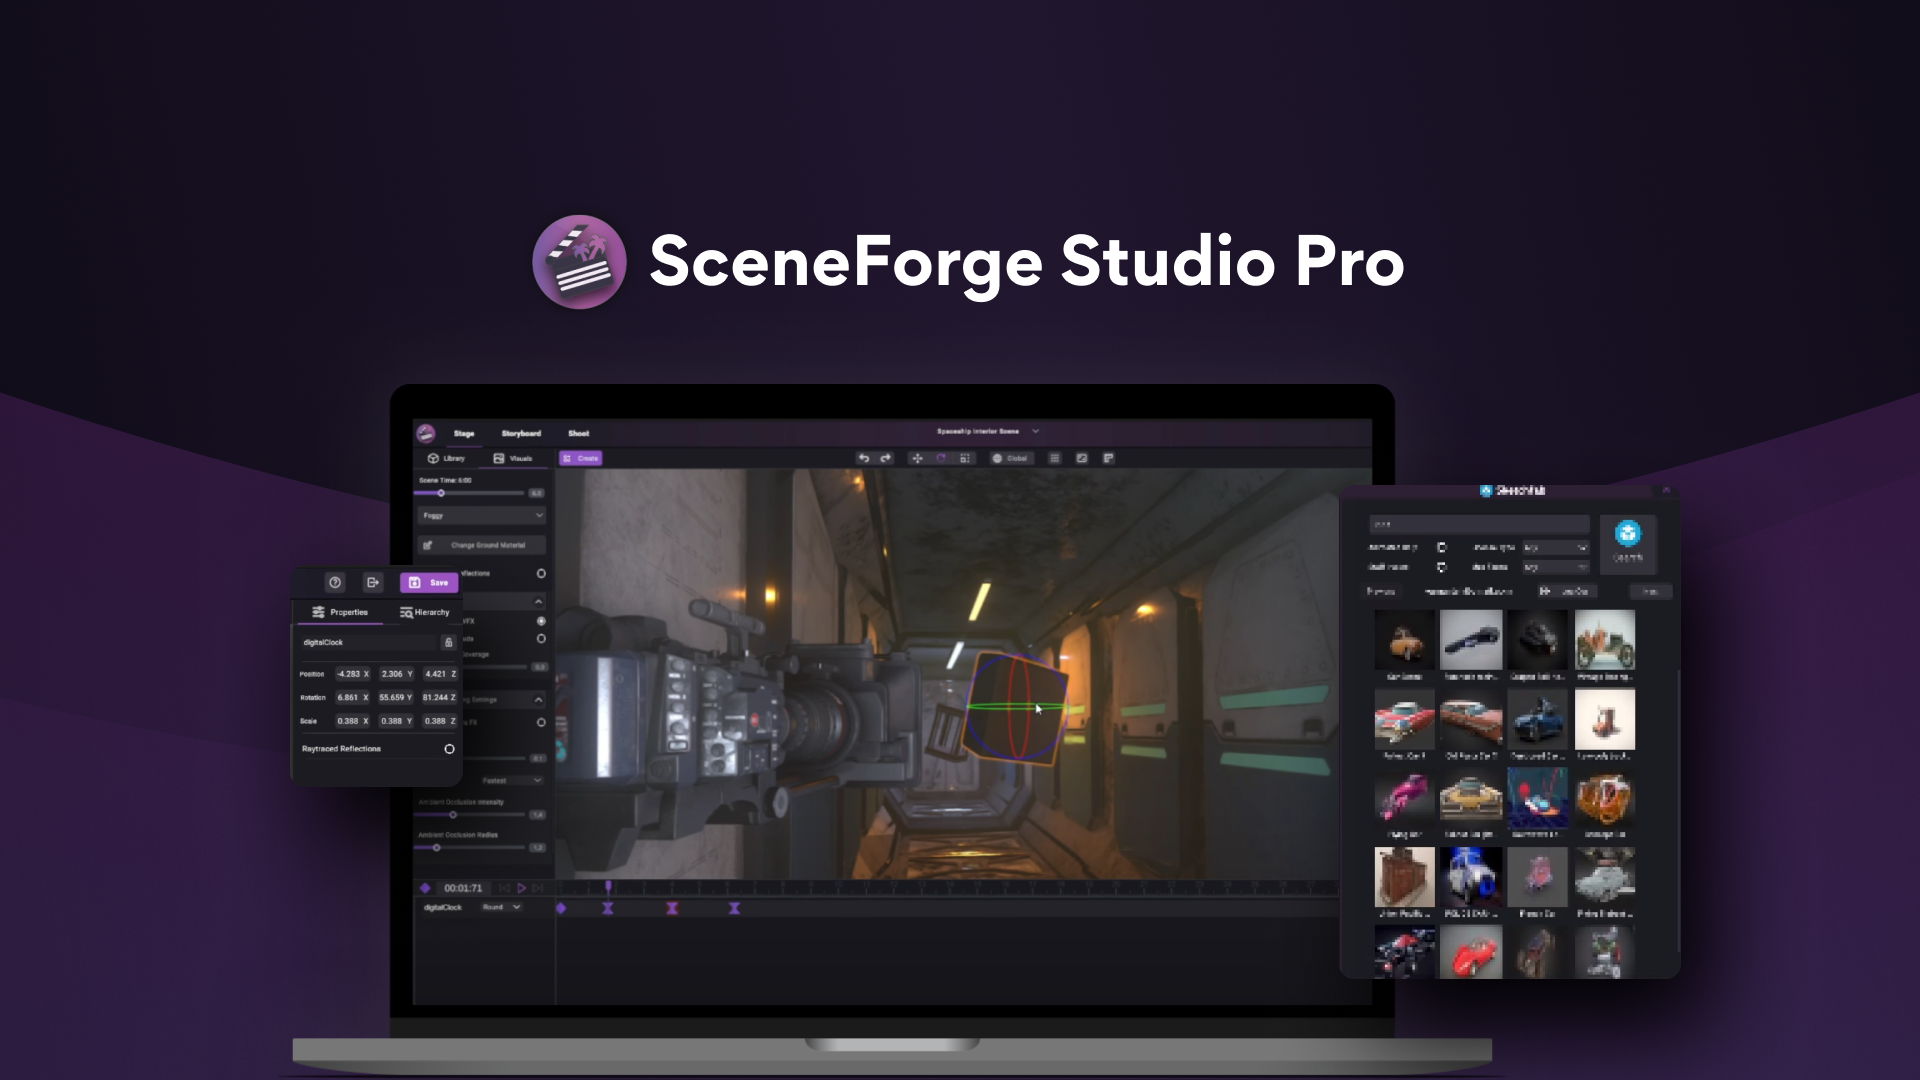 SceneForge Studio Pro